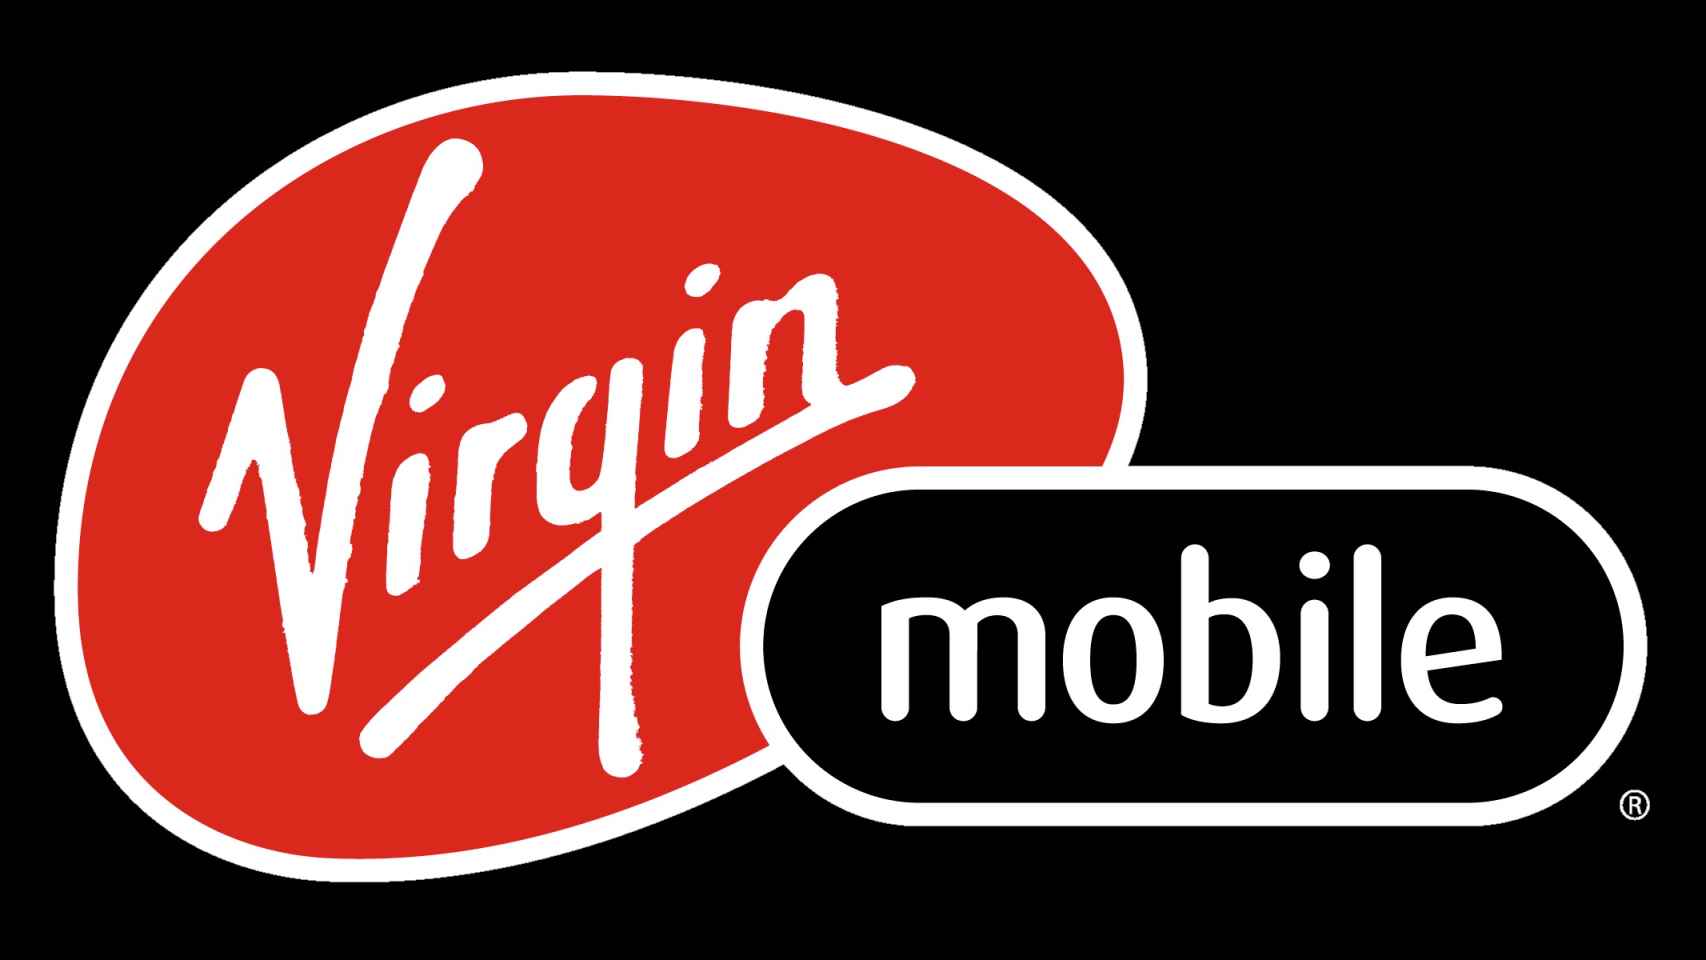 Logotipo de Virgin, la teleoperadora británica del magnate Richard Branson.